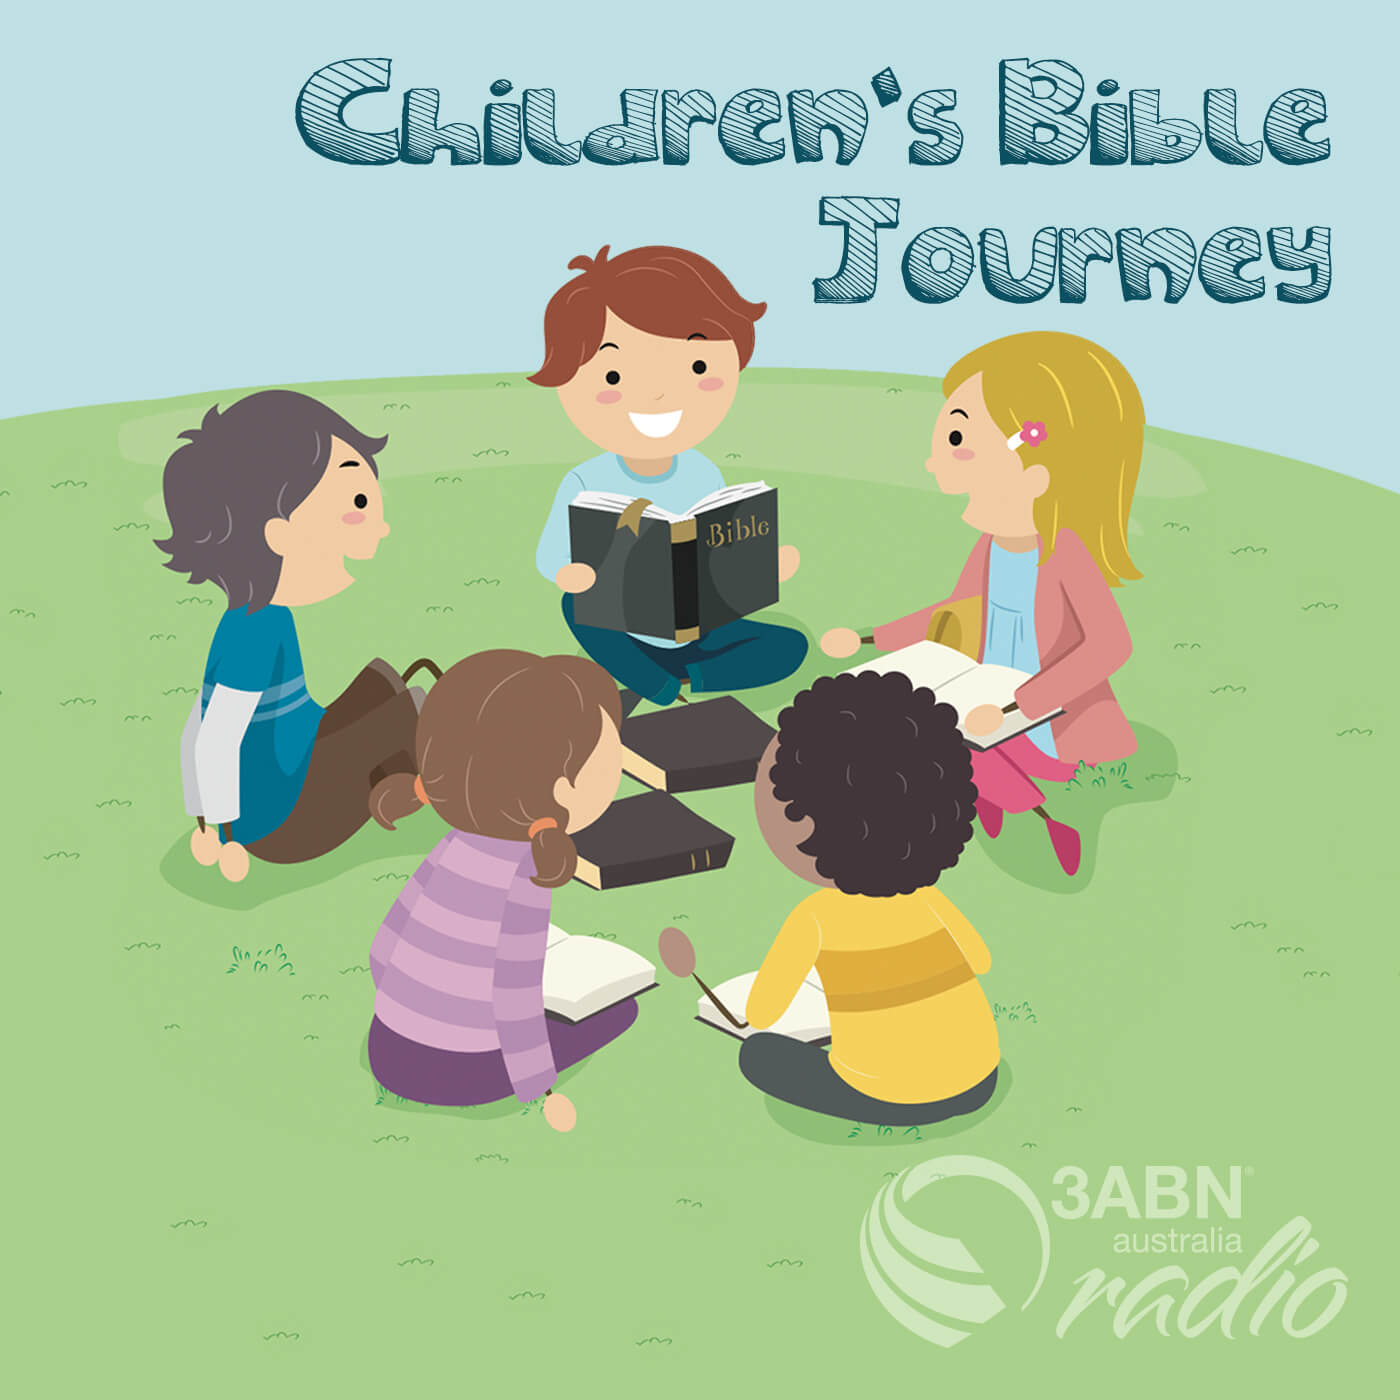 Children's Bible Journey - 2161